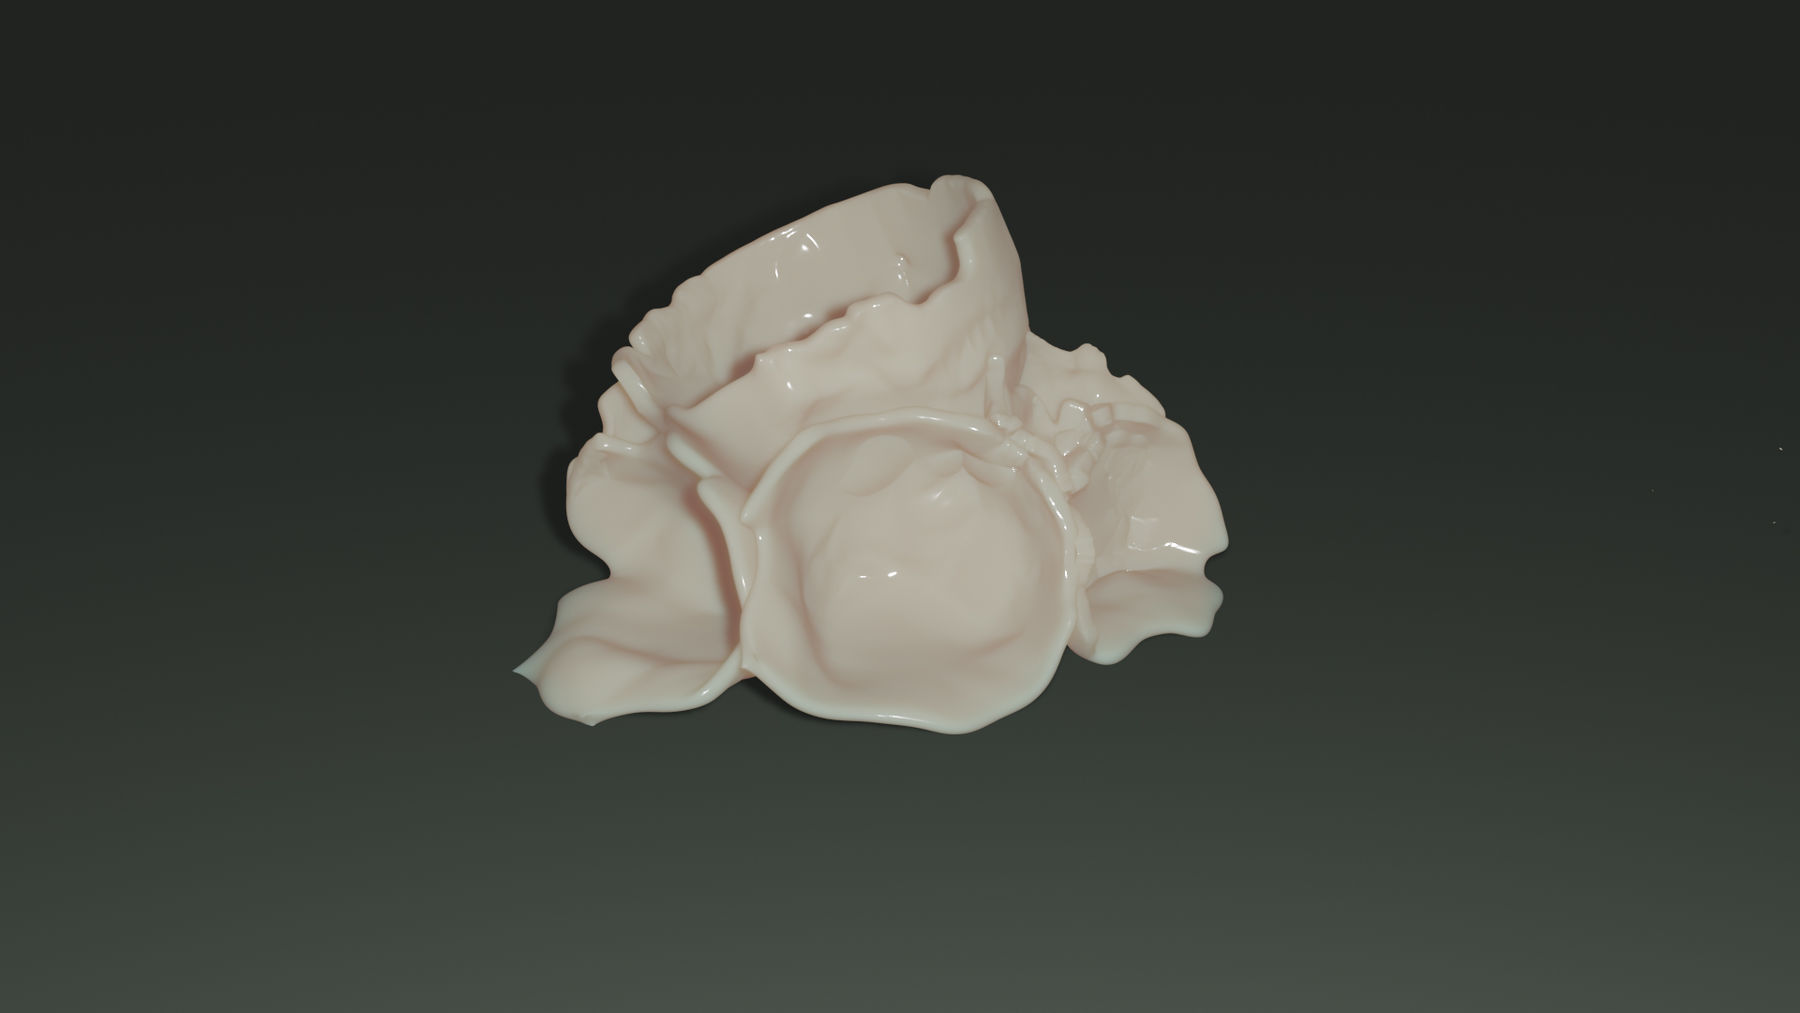 3D modelled porcelain looking organic creature